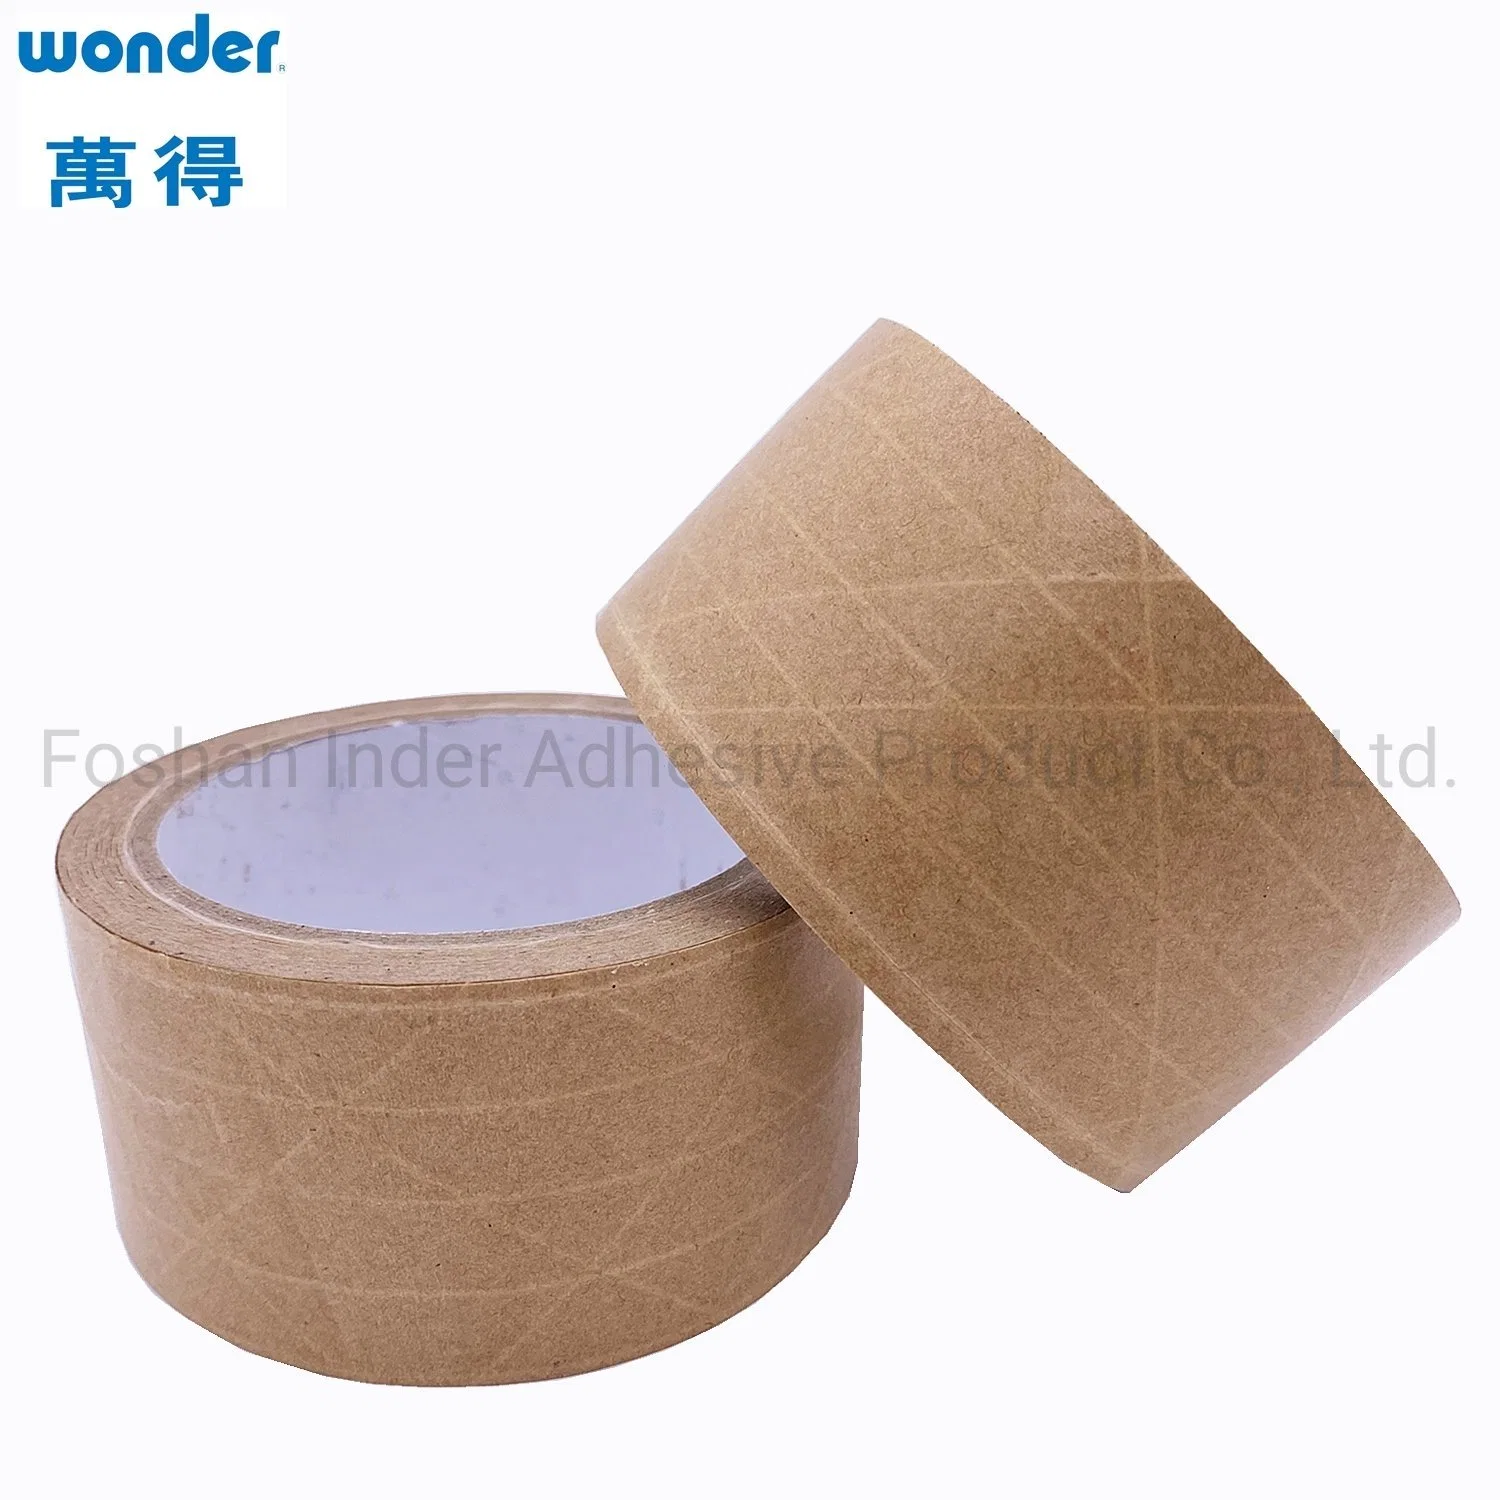 Wonder Brand General Purpose Self Adhesive Kraft Paper Tape Coated with Rubber Adhesive